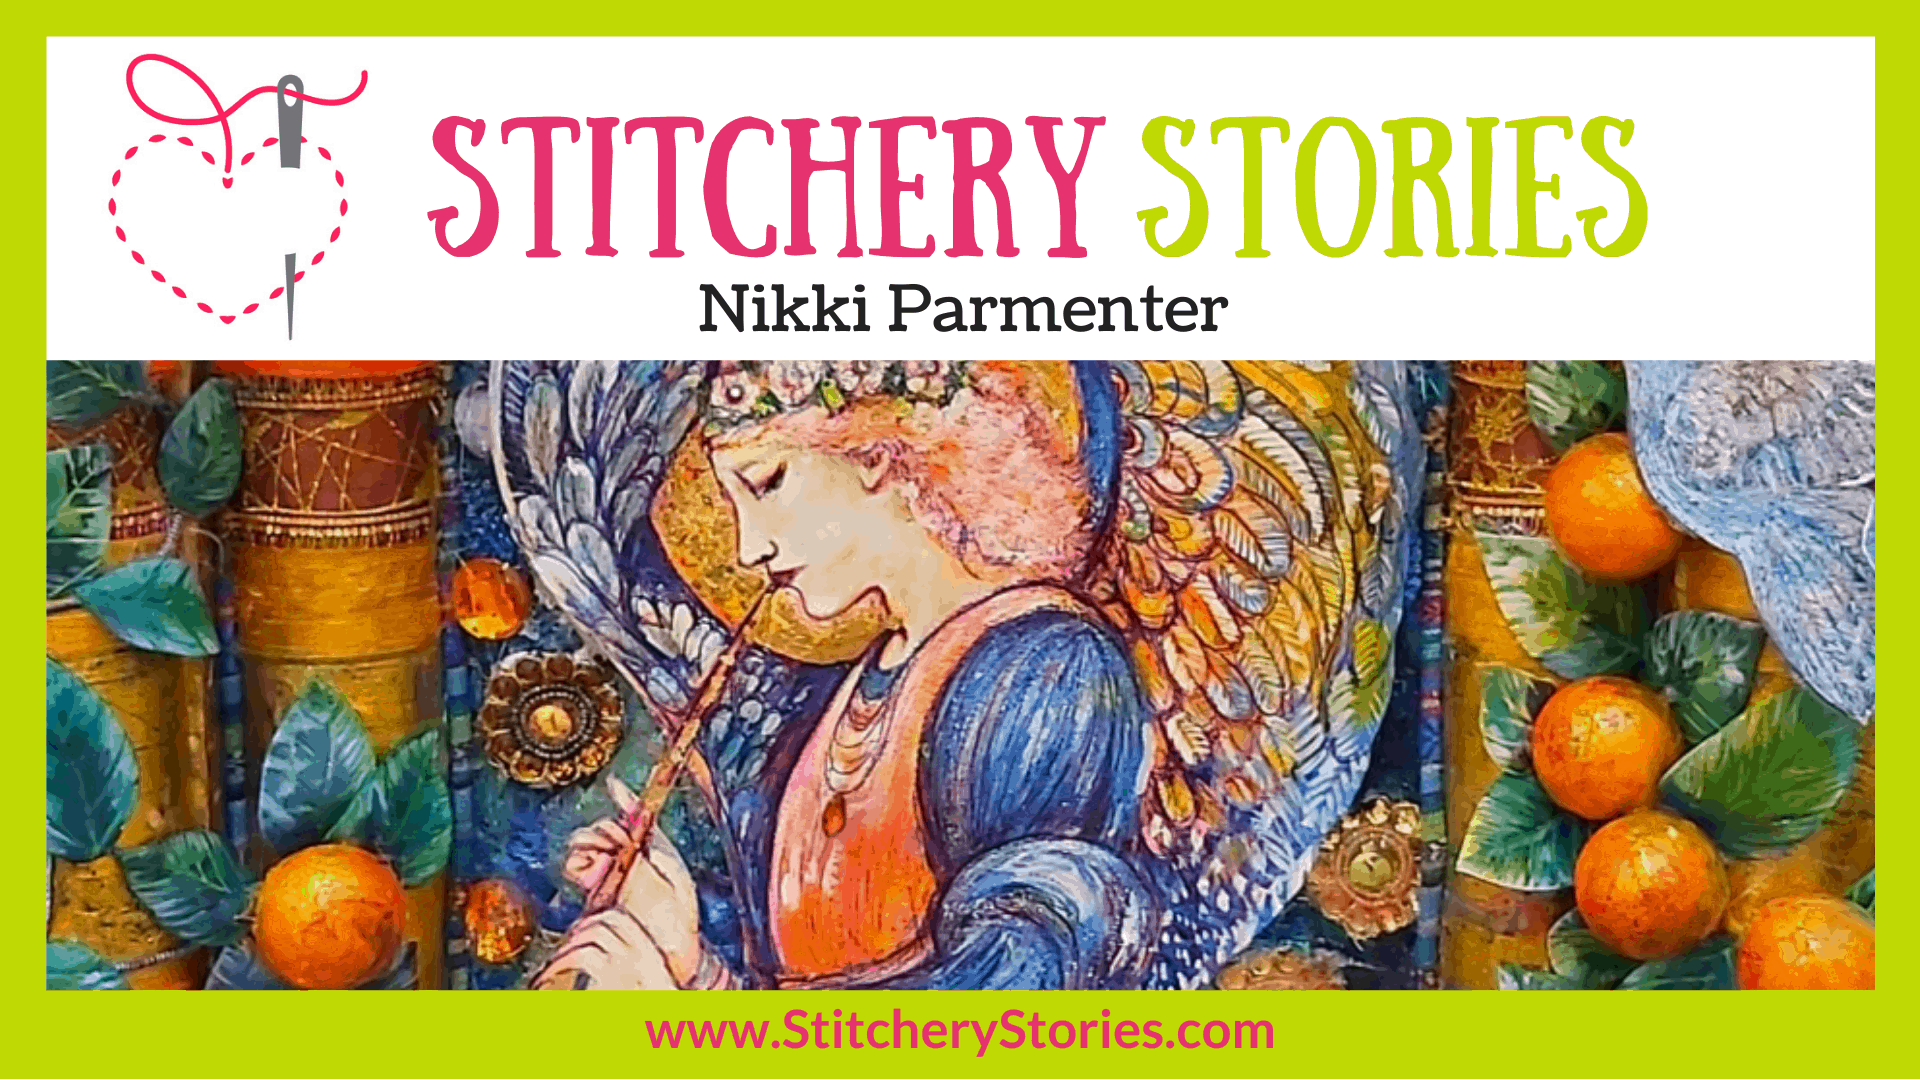 Nikki Parmenter guest Stitchery Stories textile art podcast Wide Art